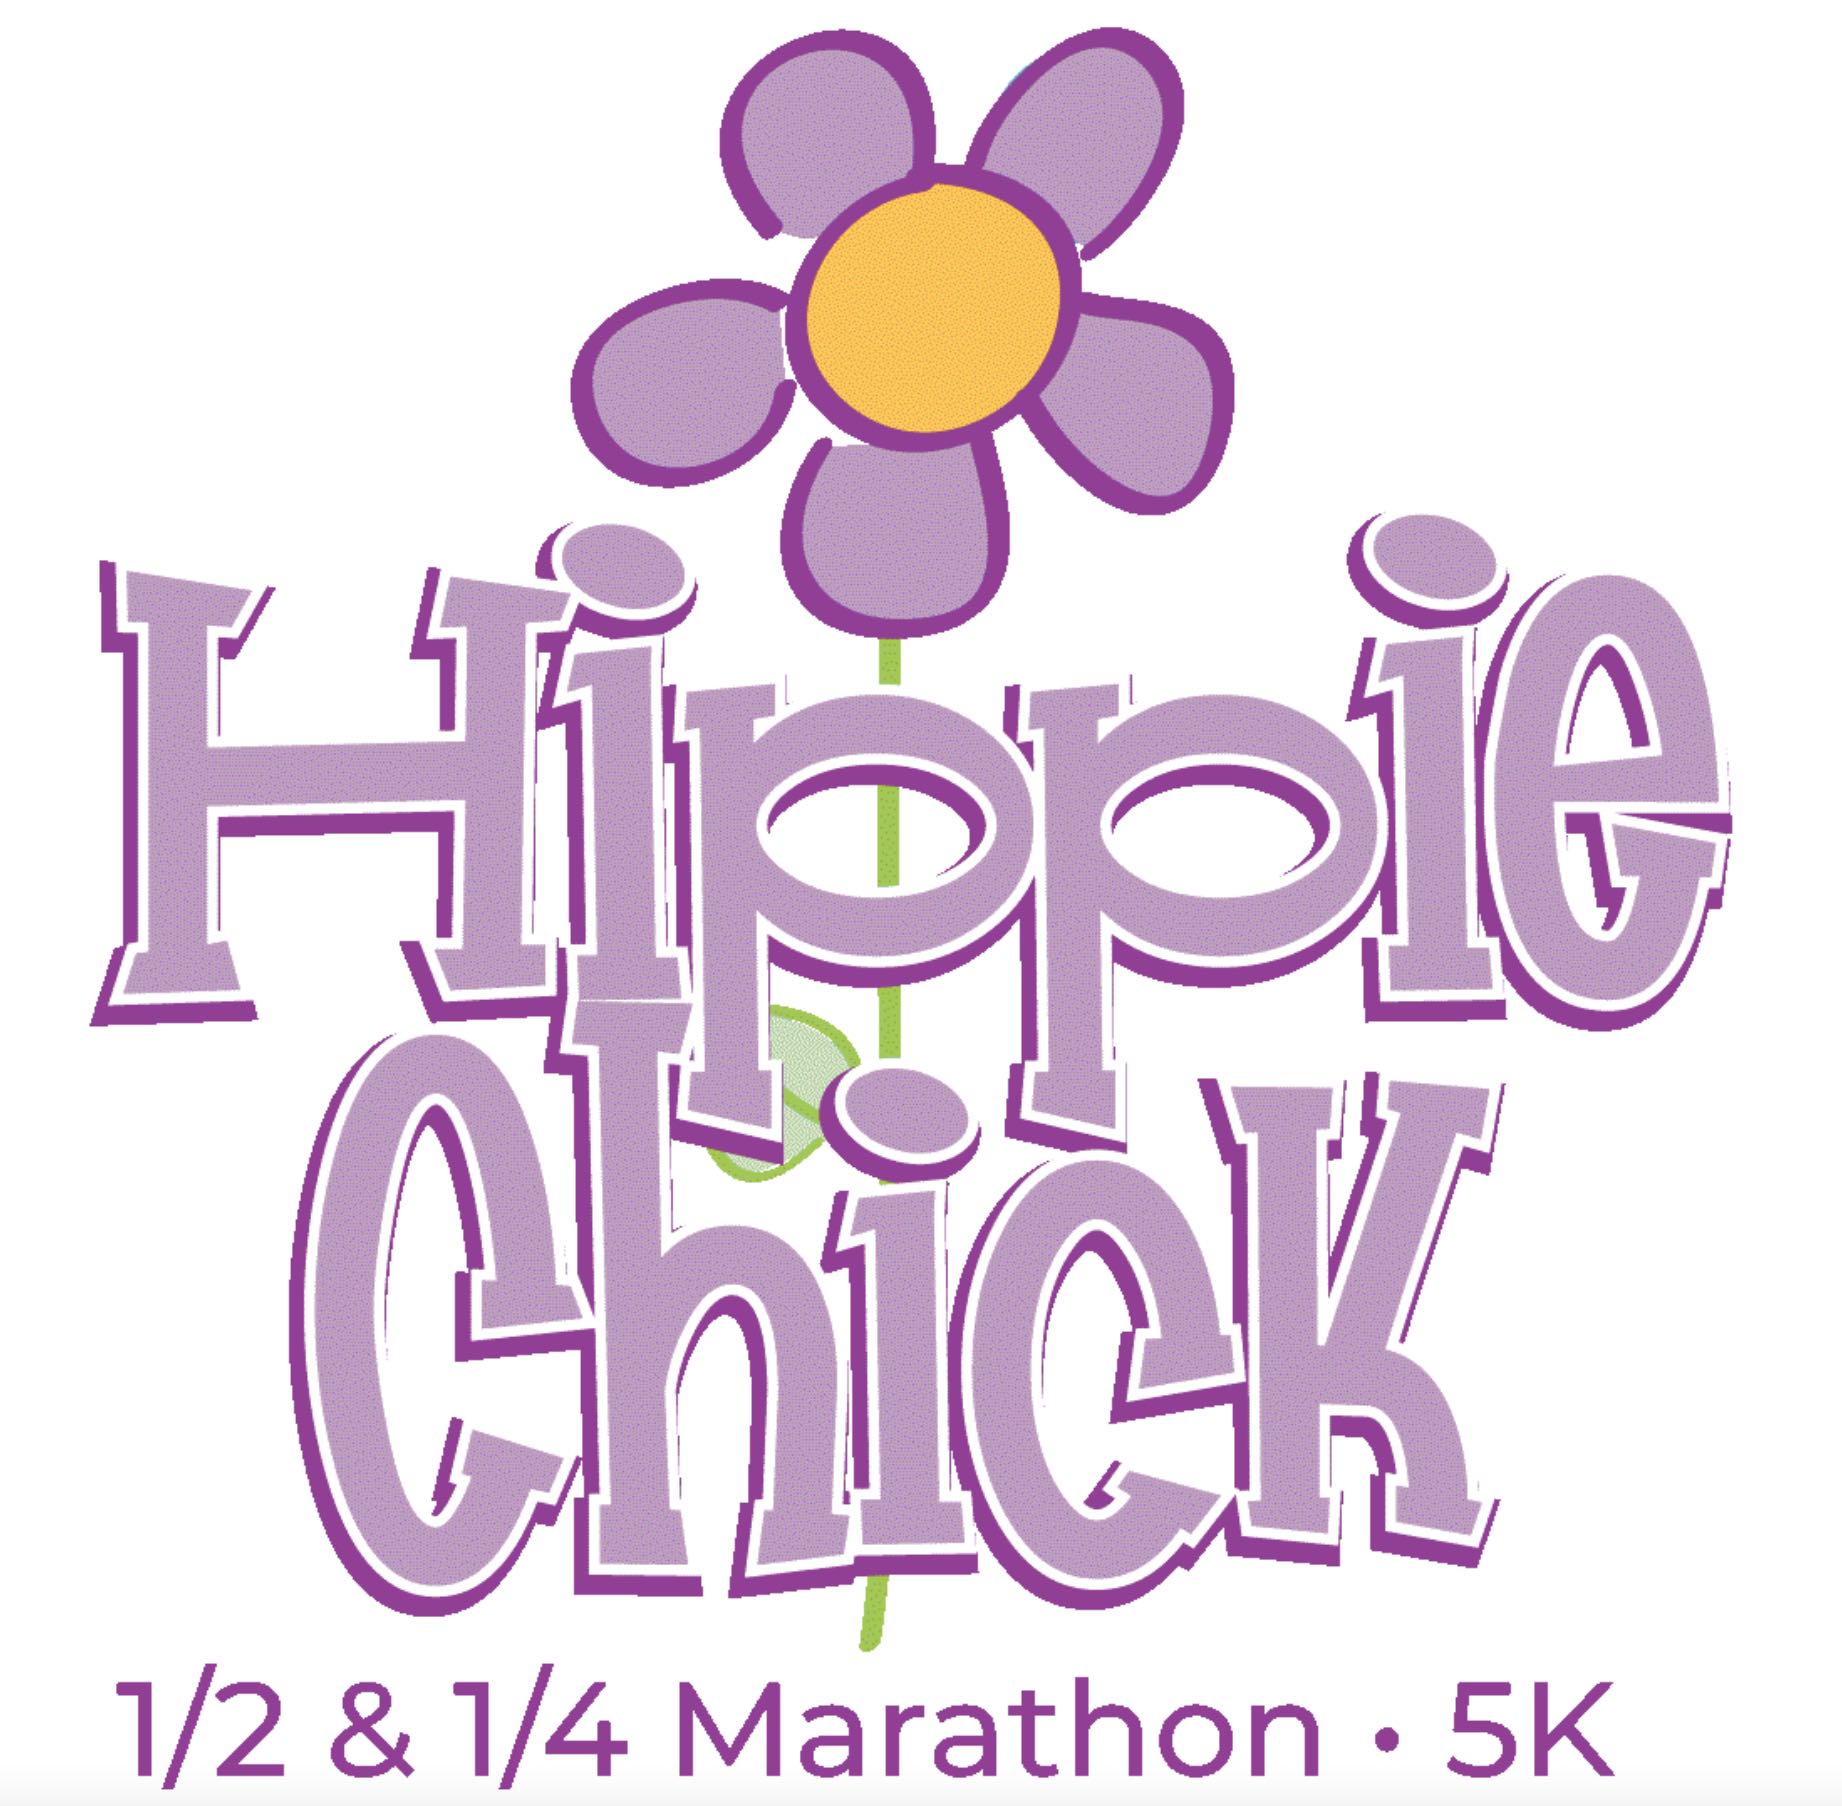 Hippie Chick Half & Quarter Marathon logo on RaceRaves